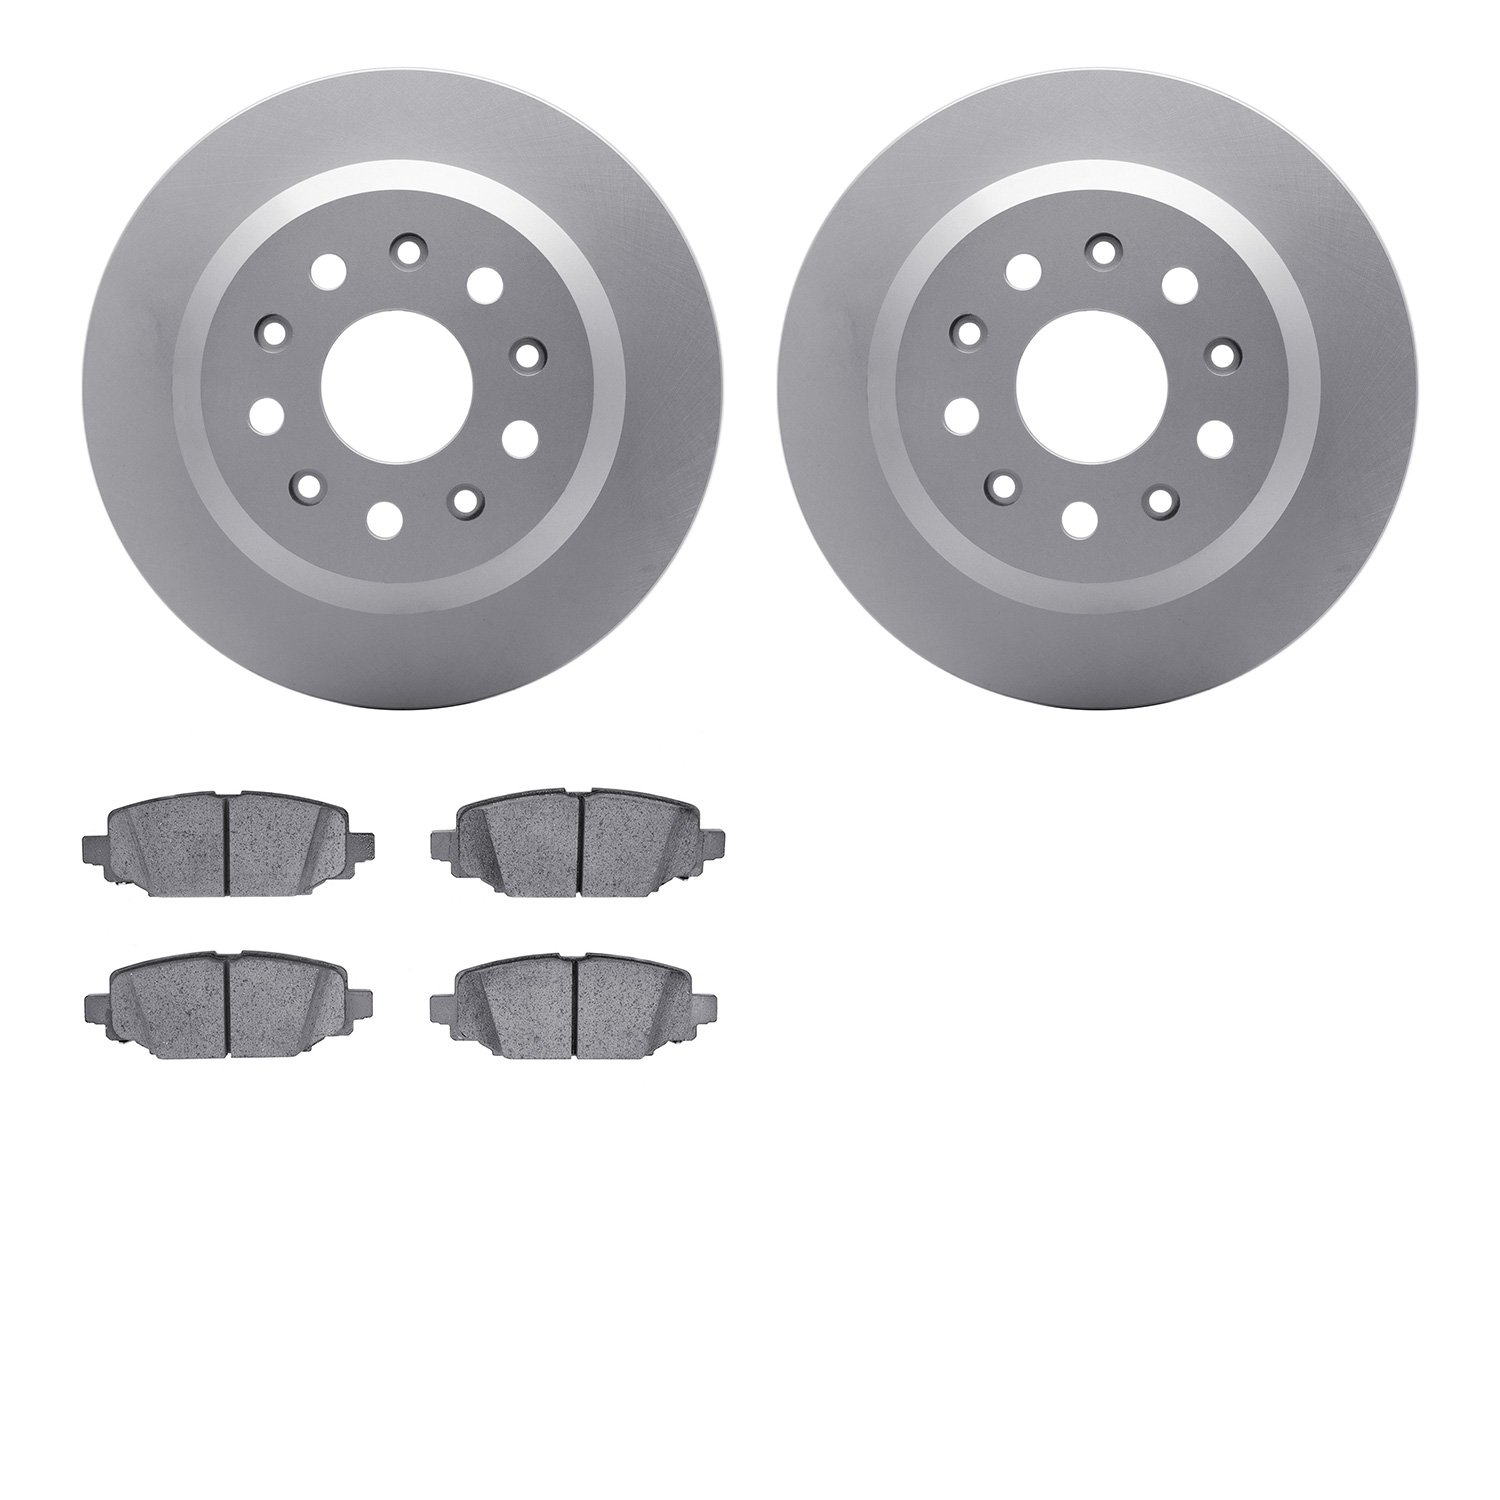 4402-42032 Geospec Brake Rotors with Ultimate-Duty Brake Pads Kit, Fits Select Mopar, Position: Rear